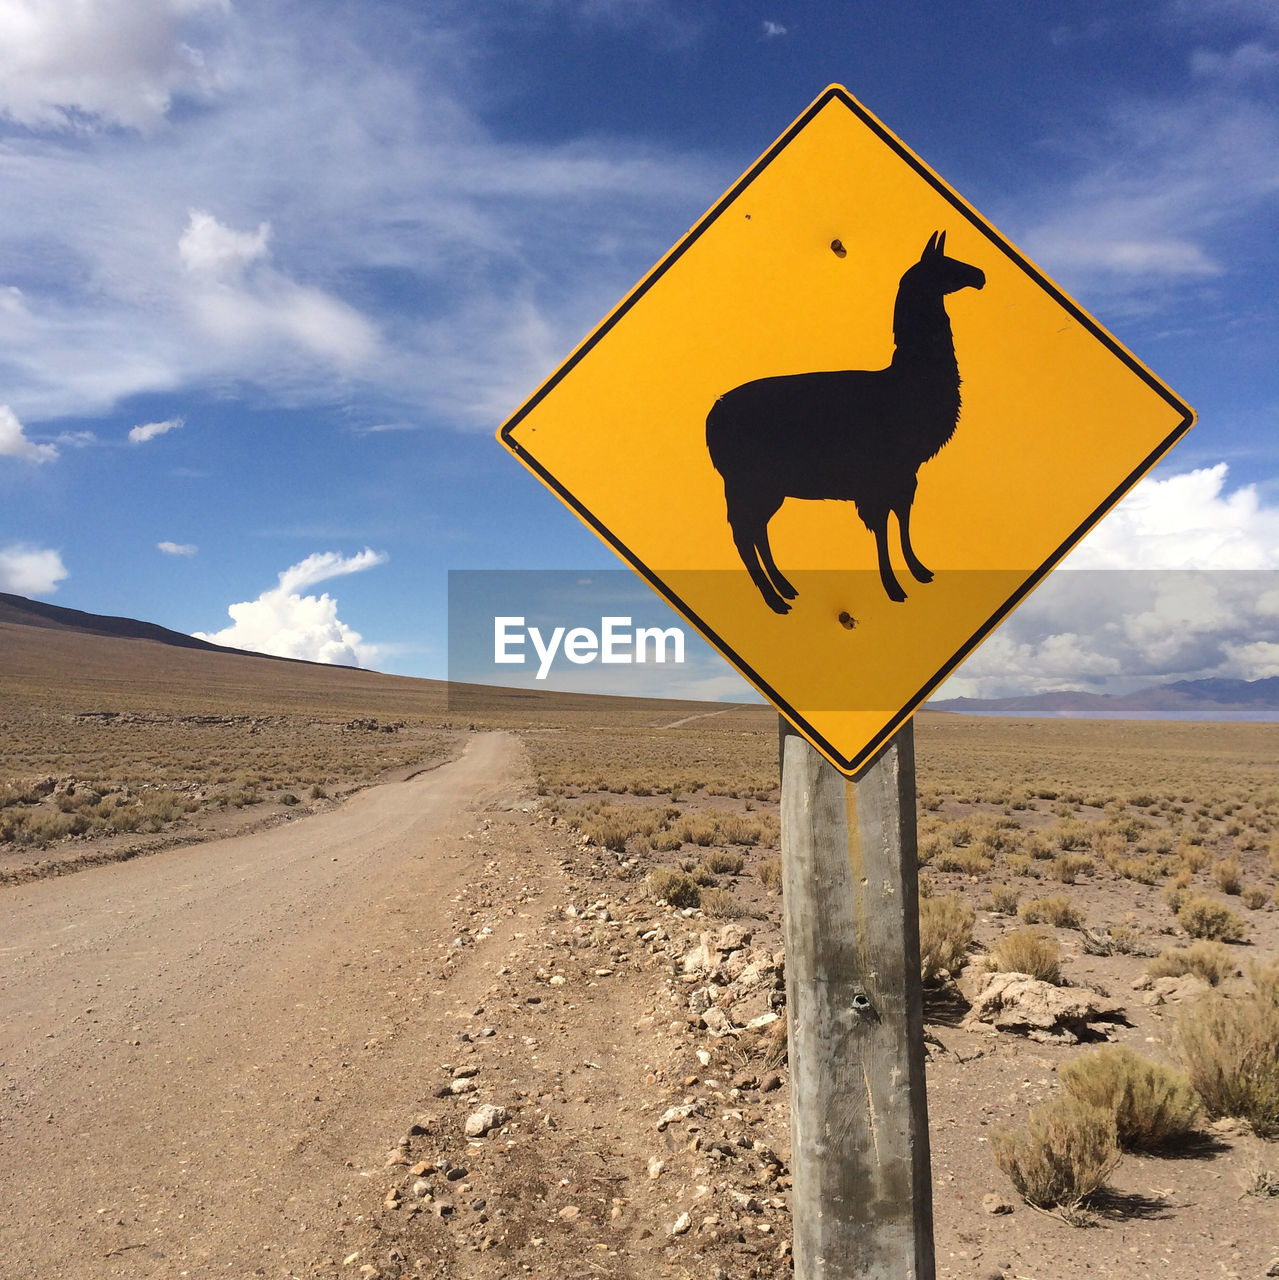 Llama crossing road sign against sky